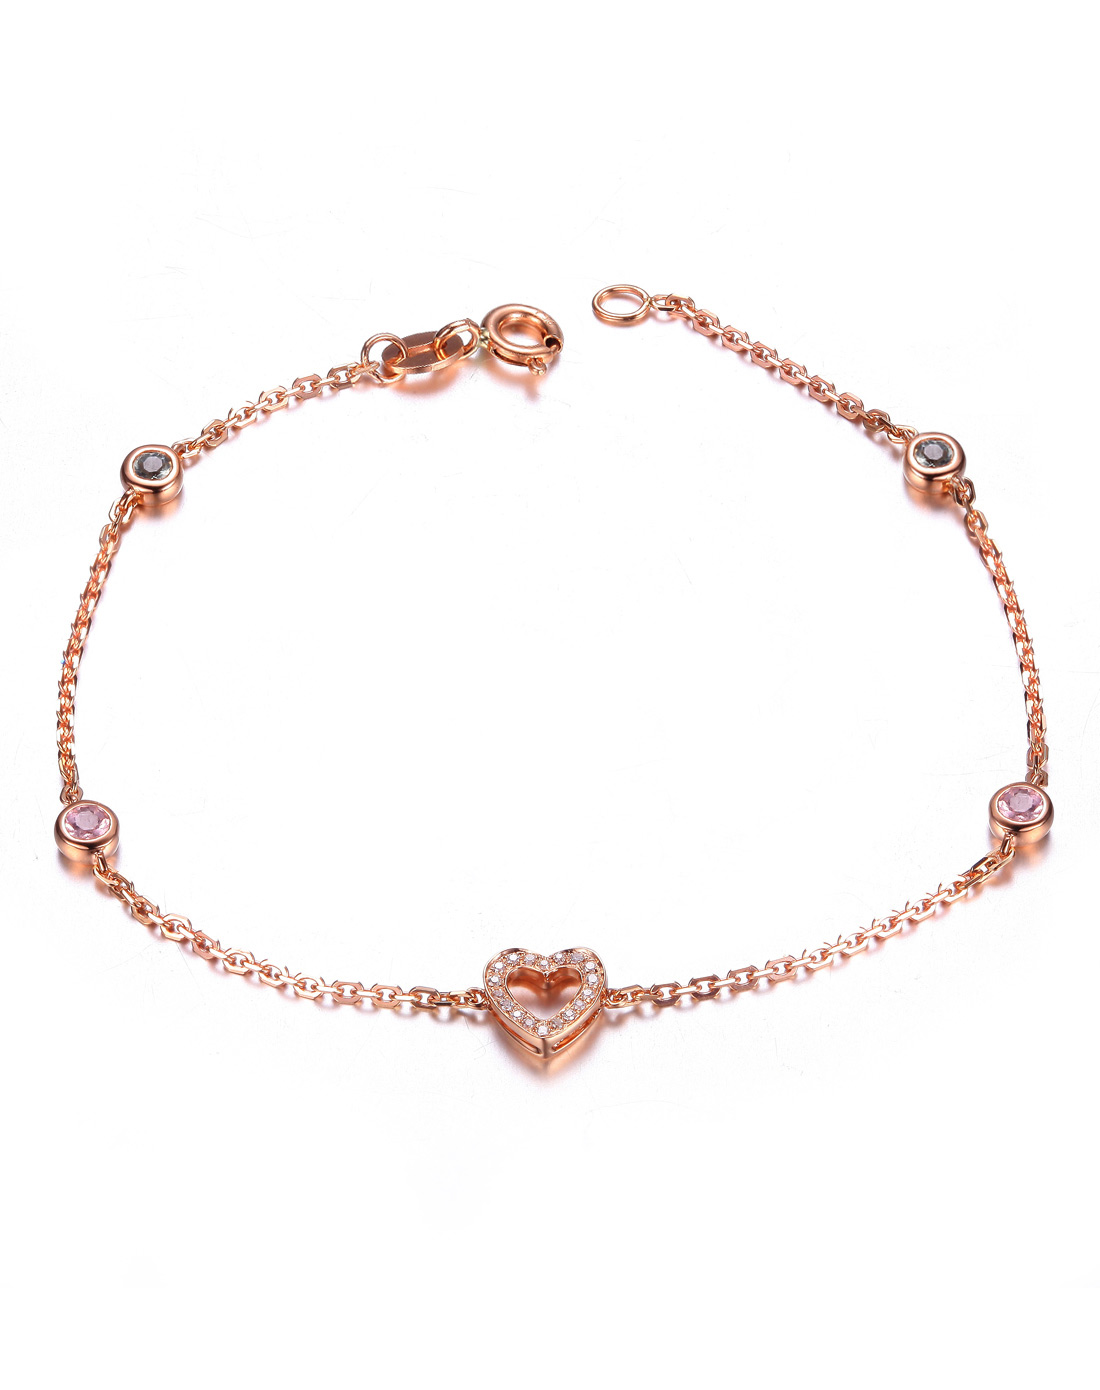 Rose gold heart-shaped bracelet 925 sterling silver bracelet Valentine's Day gift